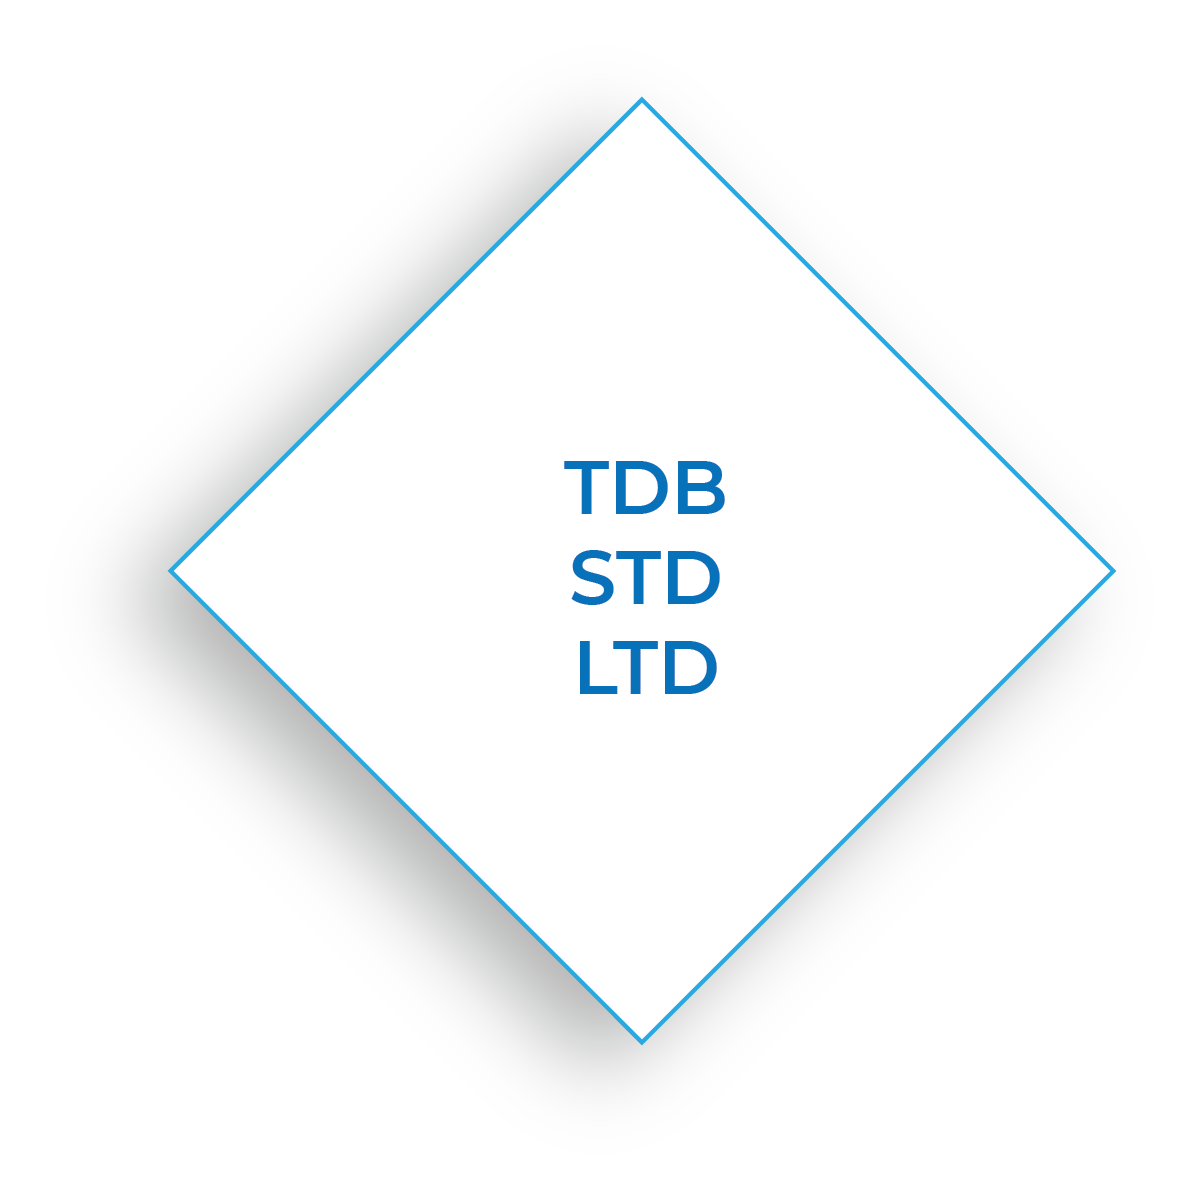 TDB STD LTD - Benefits - Bankers Cooperative Group